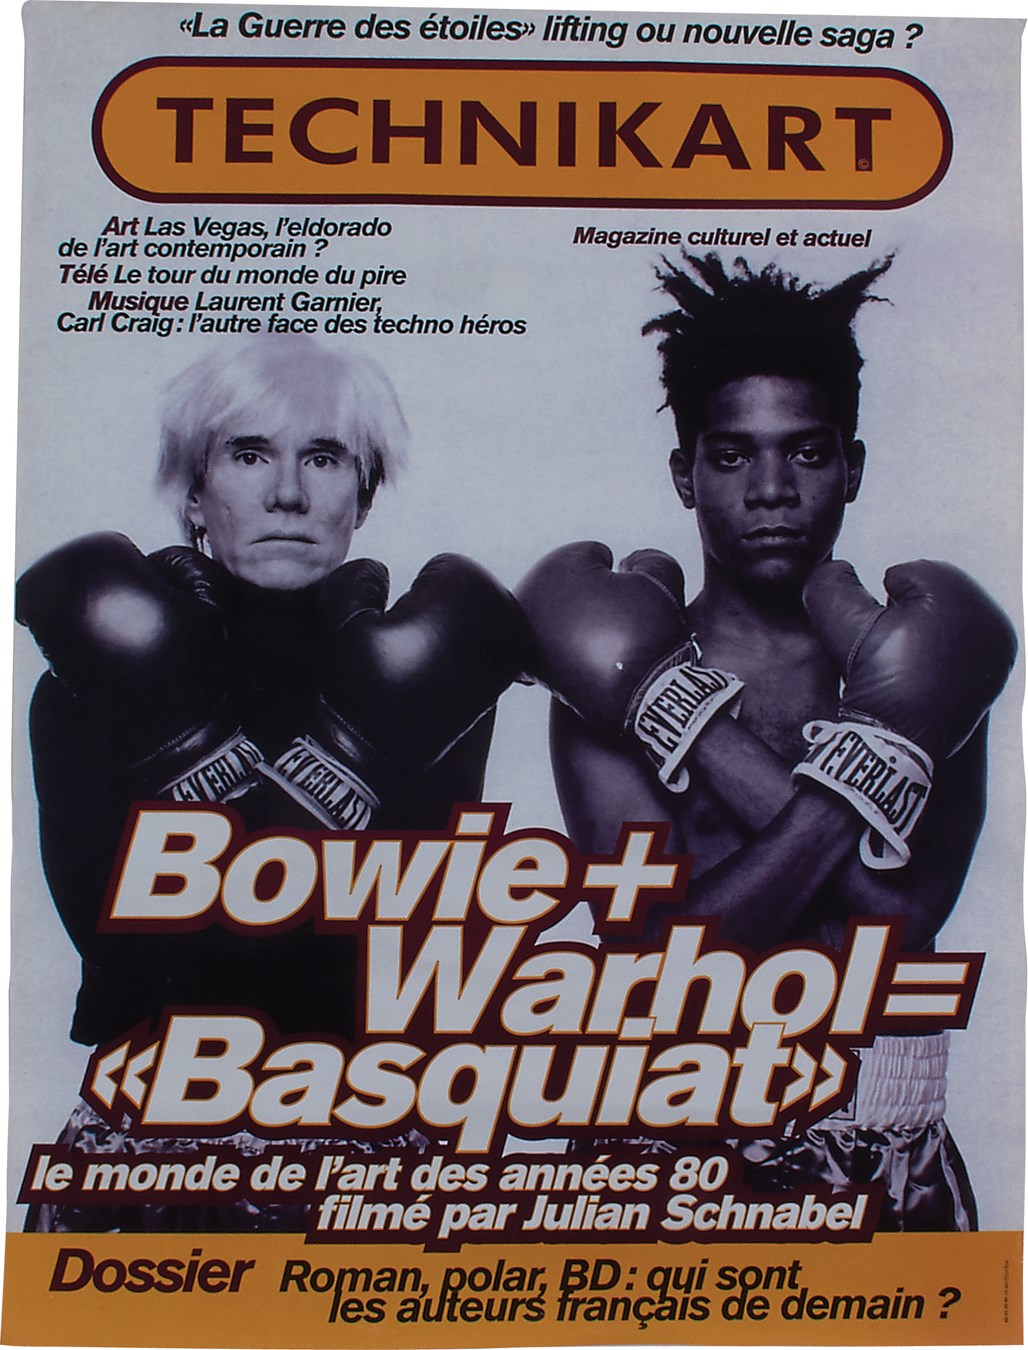 Muhammad Ali & Boxing - 1996 Andy Warhol vs. John-Claude Basquiat Exhibition Poster